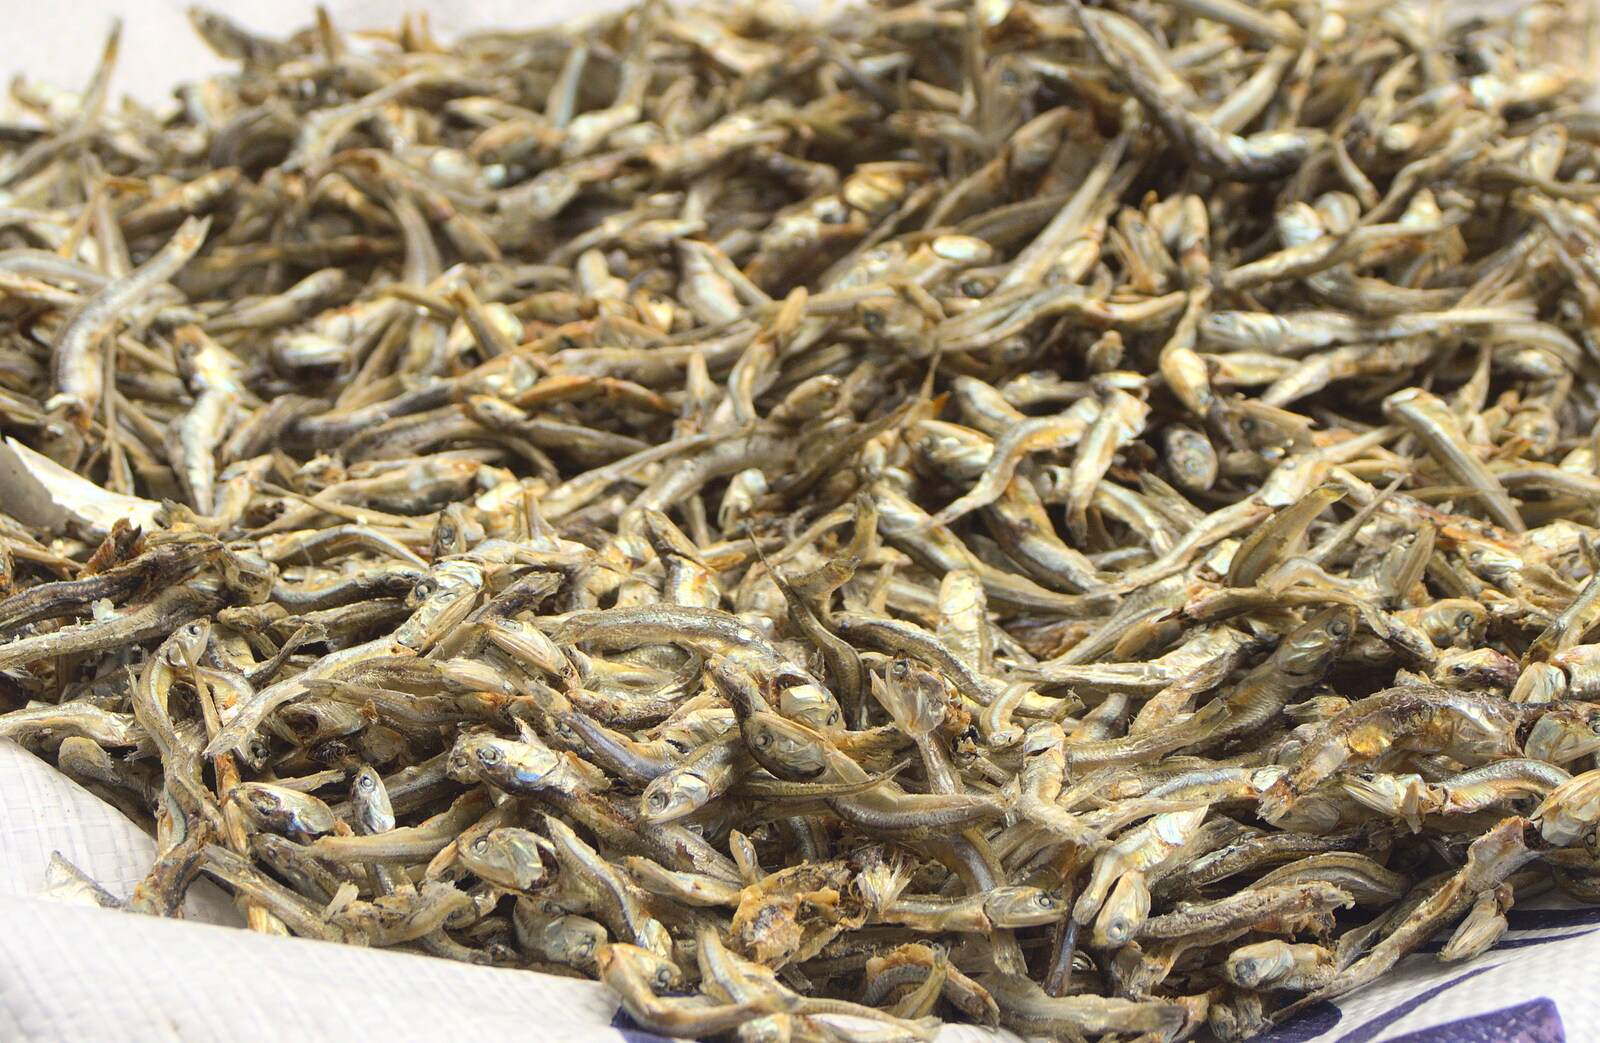 Thousands of tiny dried fishies from Seomun Market, Daegu, South Korea - 1st July 2012